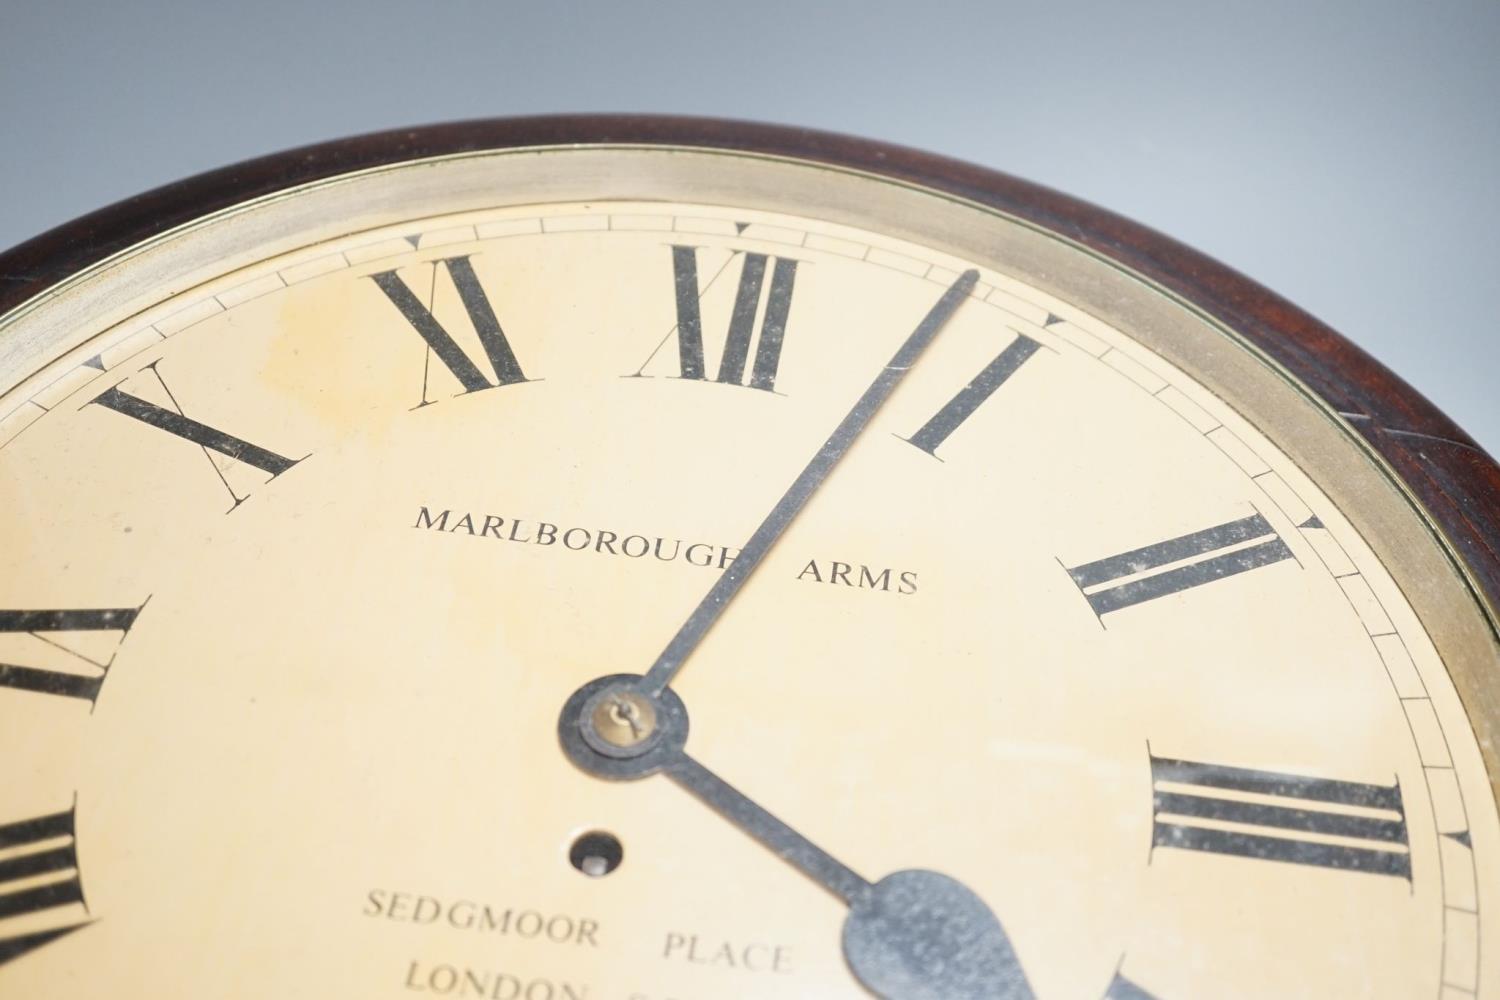 A mahogany dial clock, Marlborough Arms, Sedgmoor Place, London SE5.48 cms diameter. - Image 2 of 2